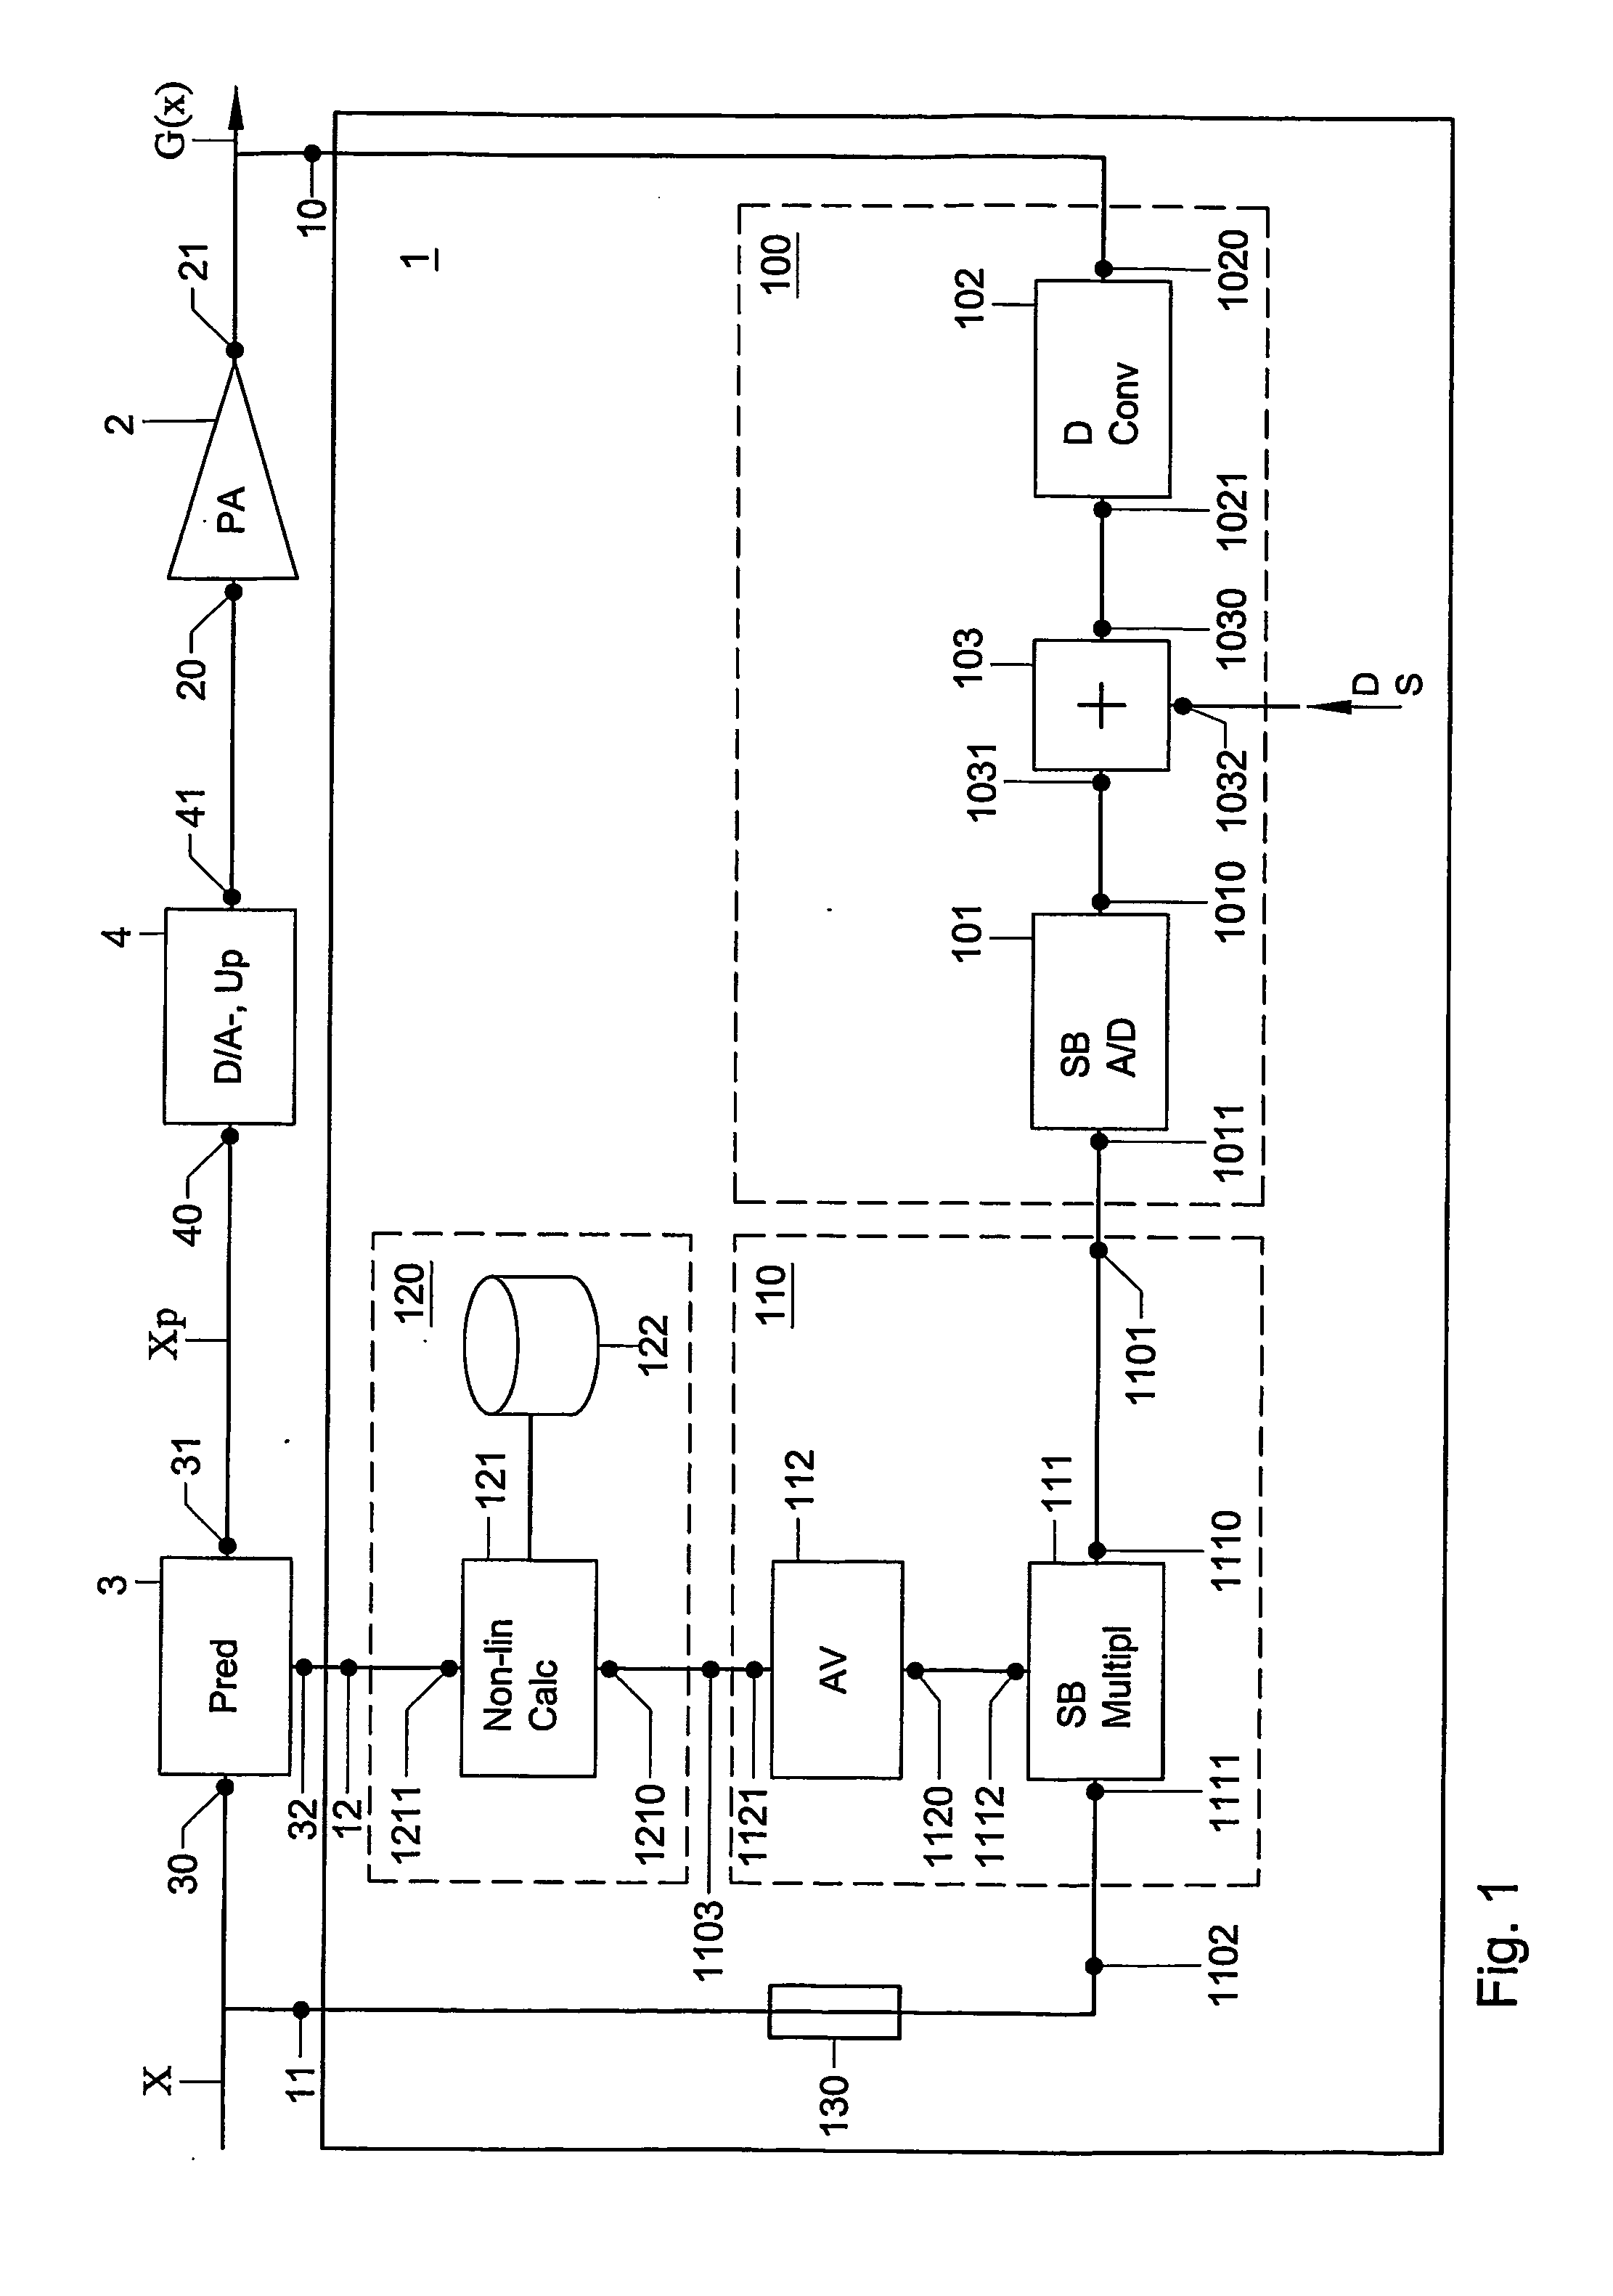 Predistortion control device and method, assembly including a predistortion control device